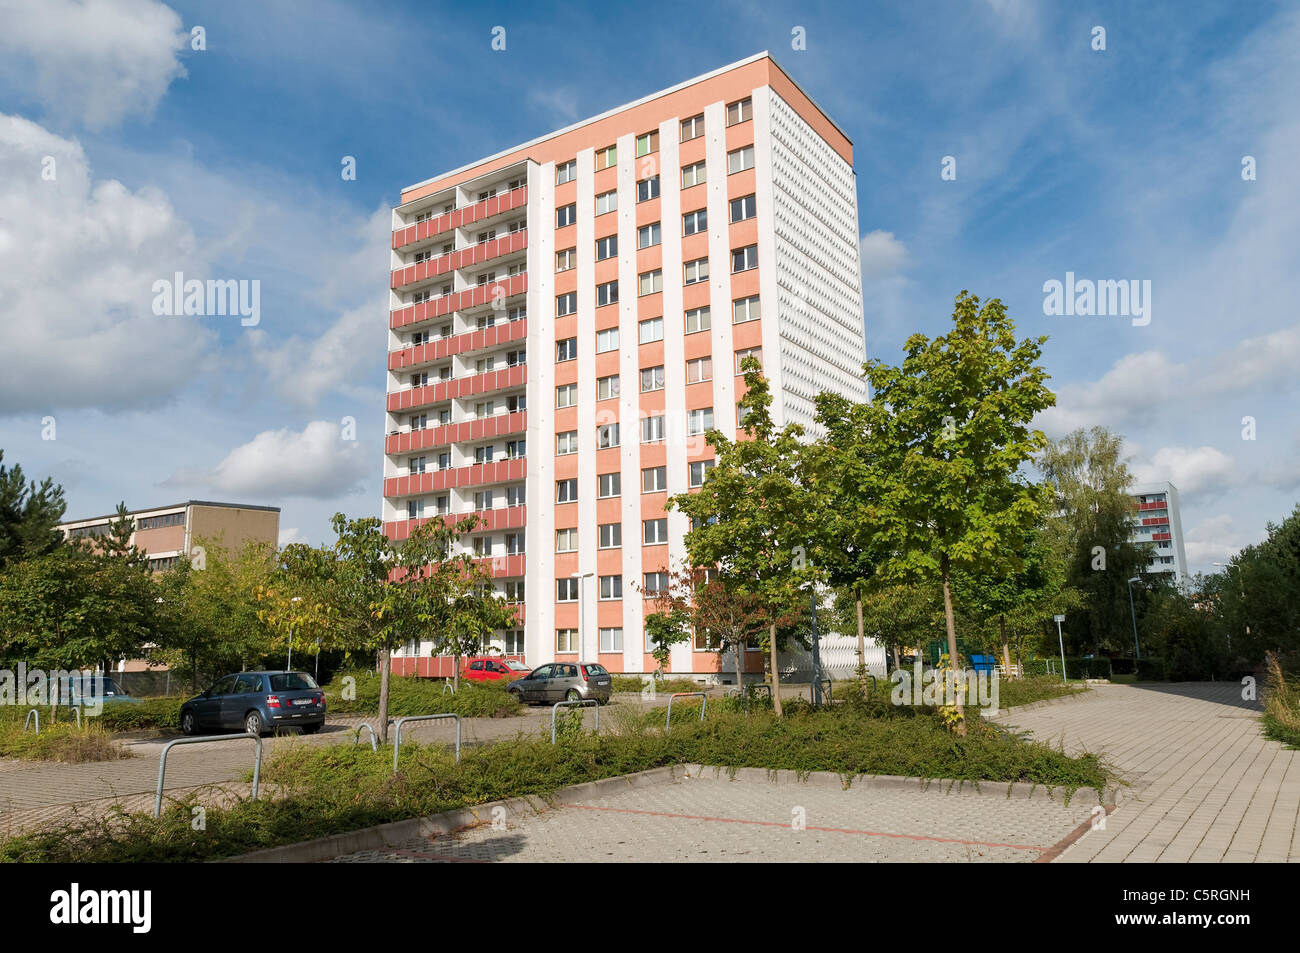 Plattenbau, pre-fabricated concrete building, social housing, residential estate, Jena, Thuringia, Germany, Europe Stock Photo